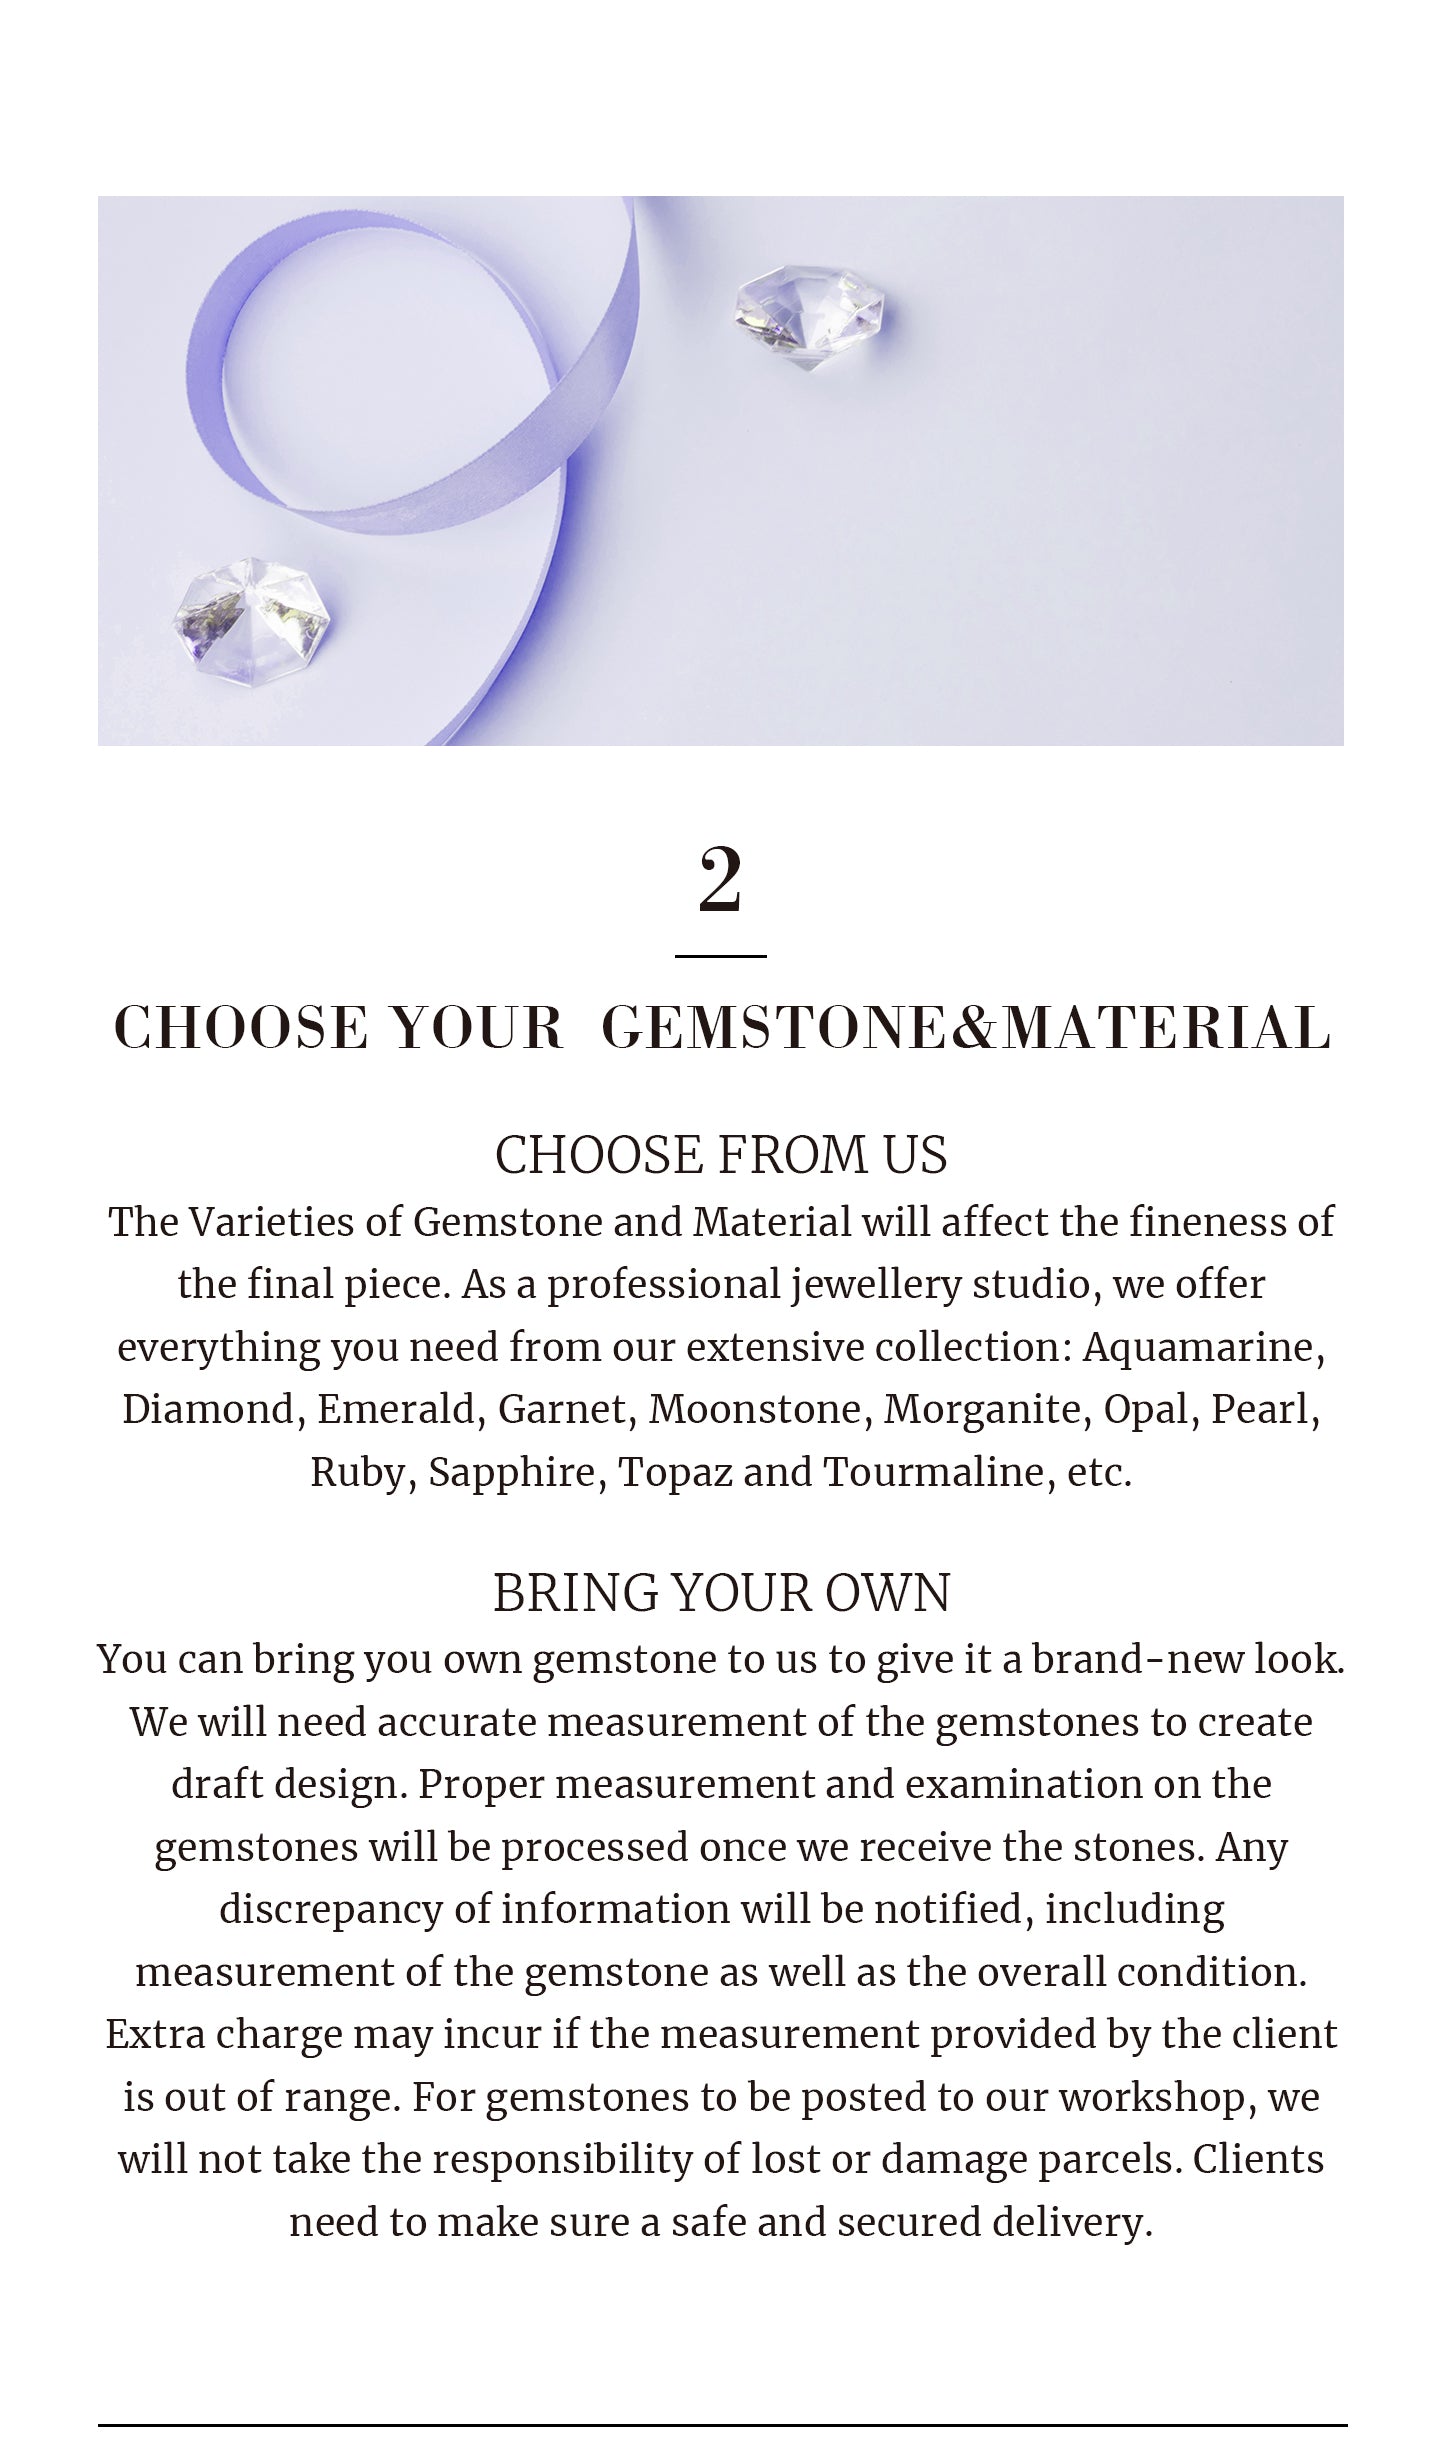 Choose gemstone and material